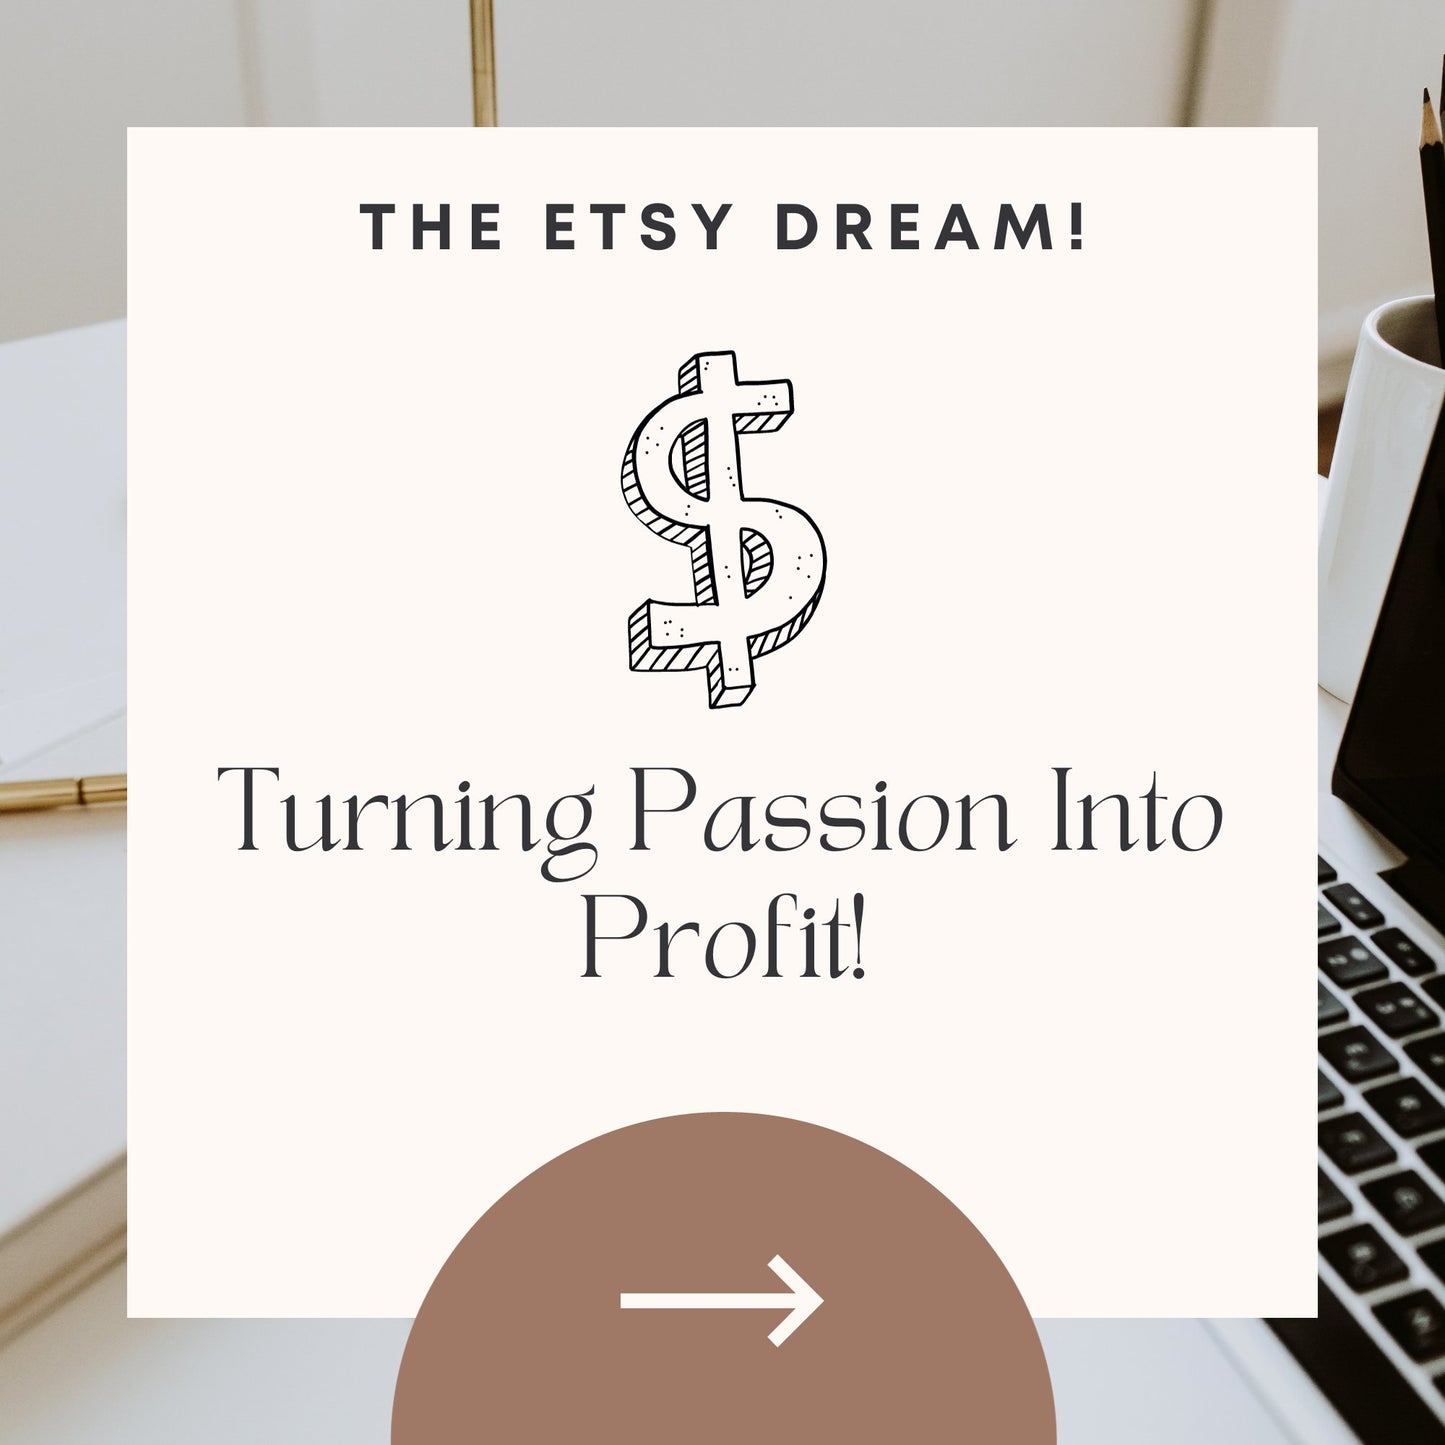 The Etsy Dream: Turning Passion Into Profit eBook (DIGITAL DOWNLOAD) ebook Weaver Custom Engravings Digital Downloads   